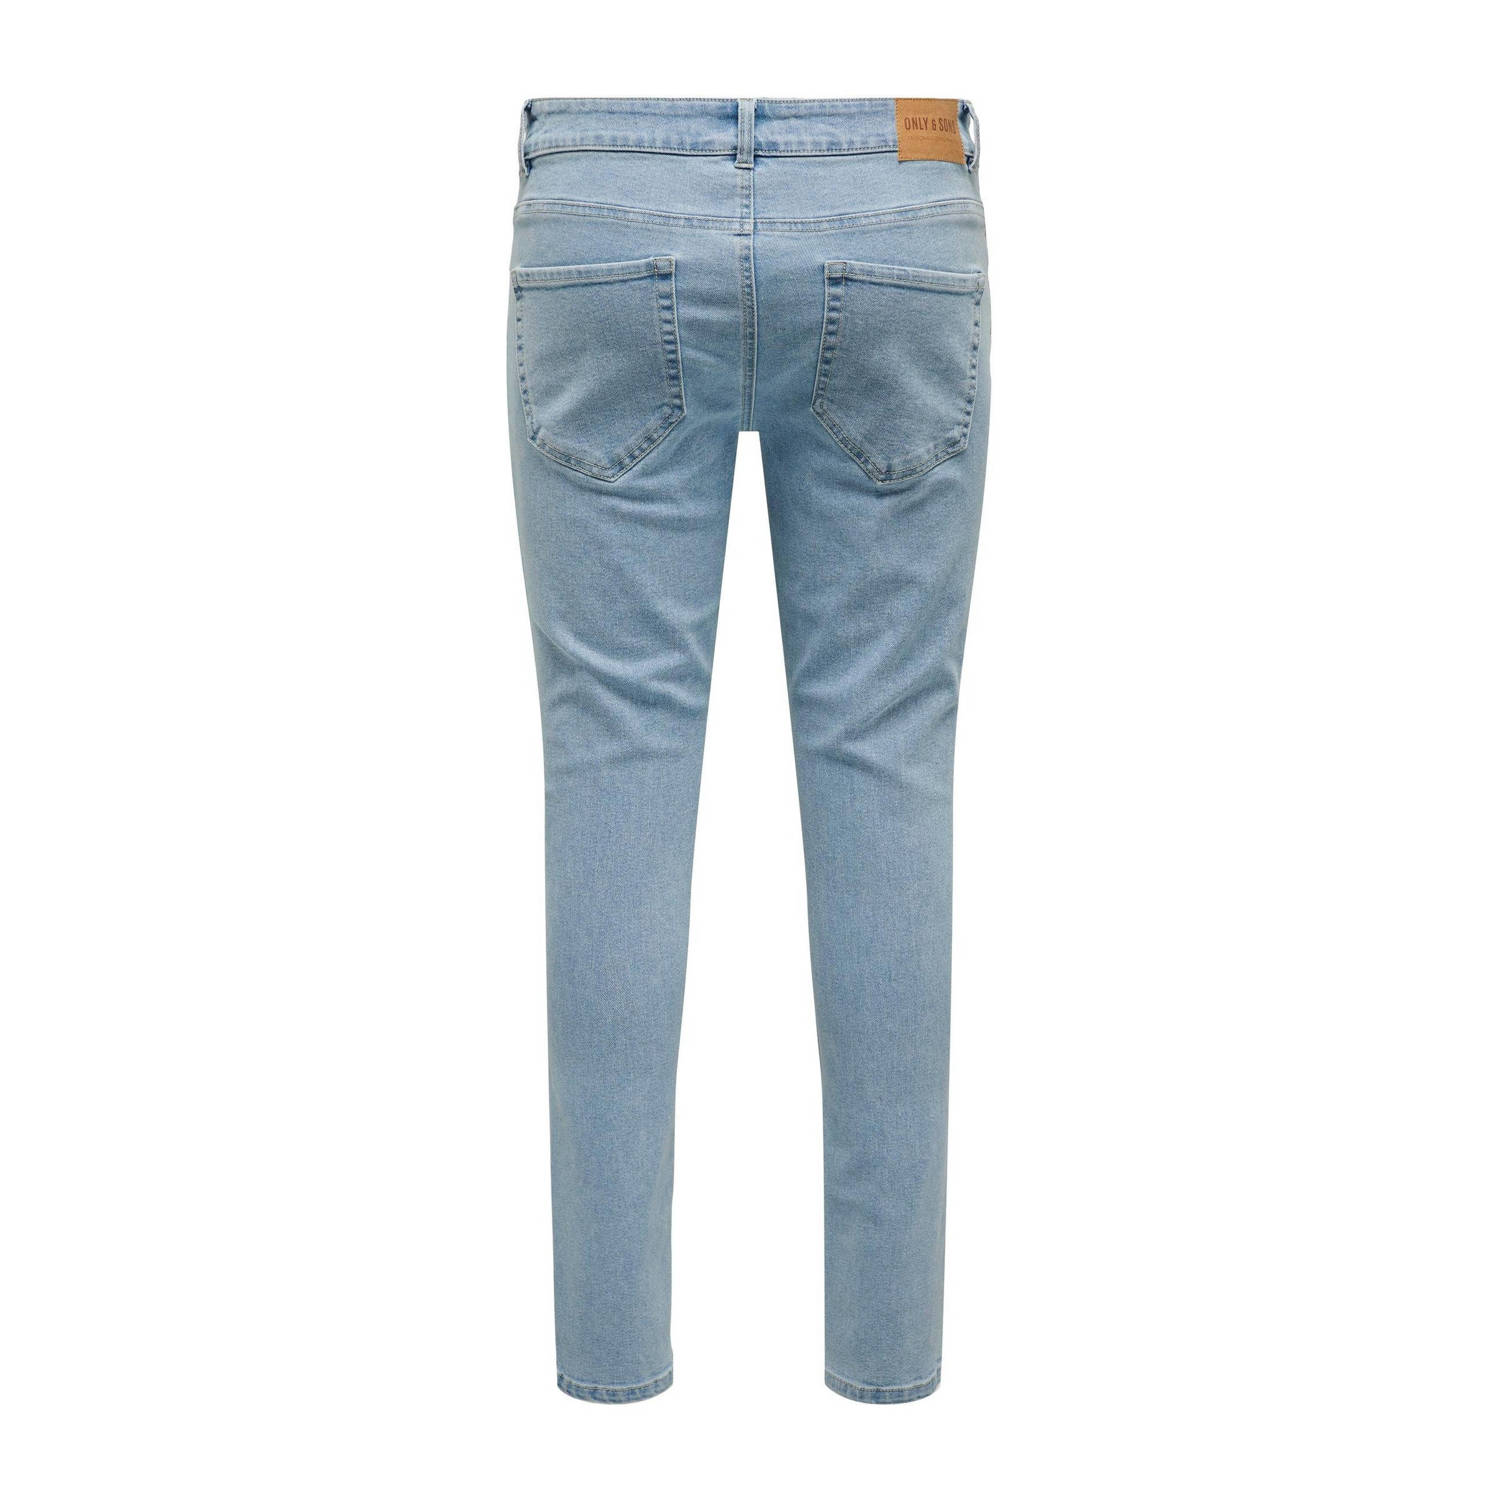 ONLY & SONS skinny jeans ONSWARP 7985 light blue denim